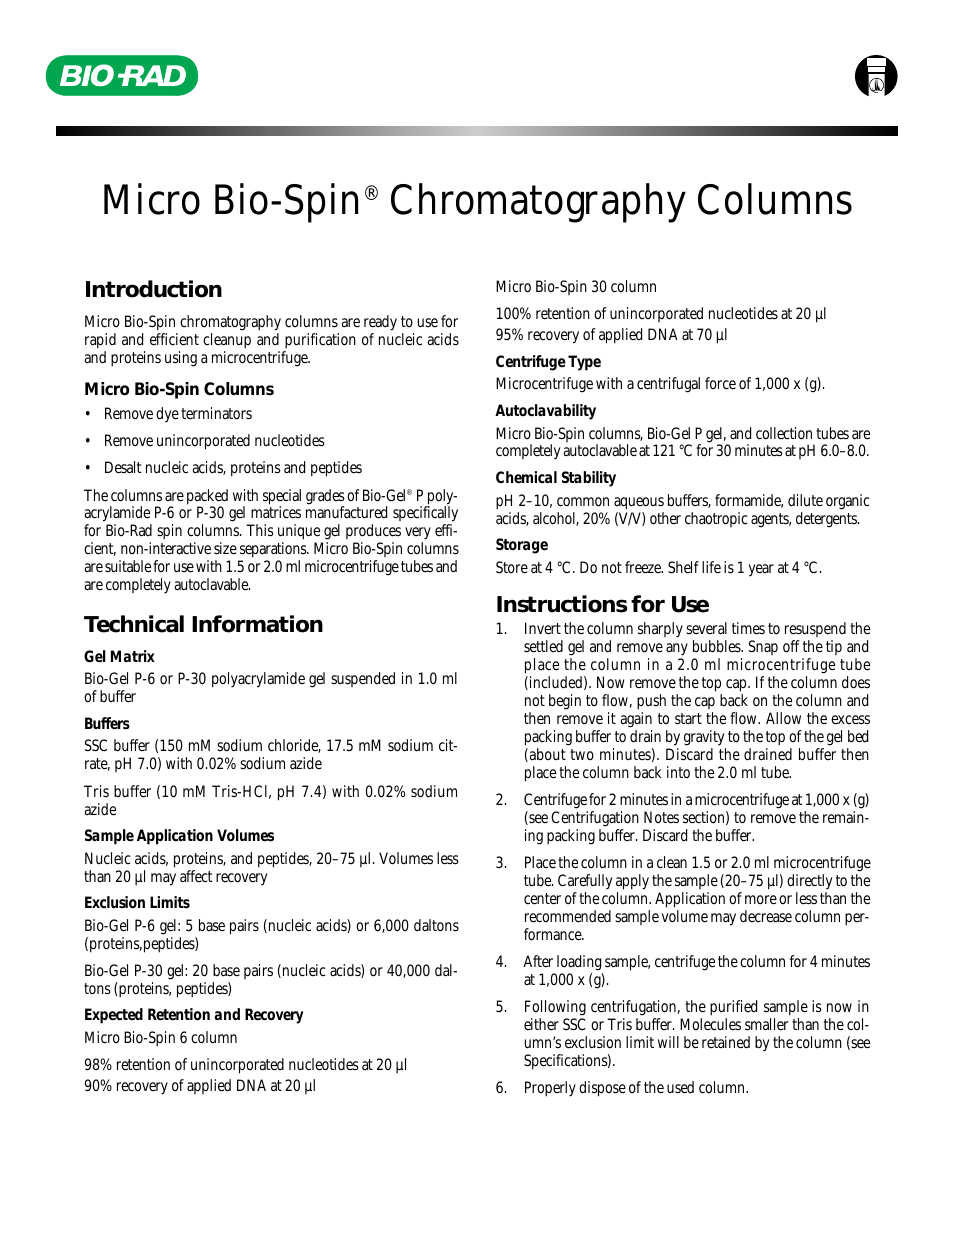 Micro Bio-Spin® Columns with Bio-Gel® P-6